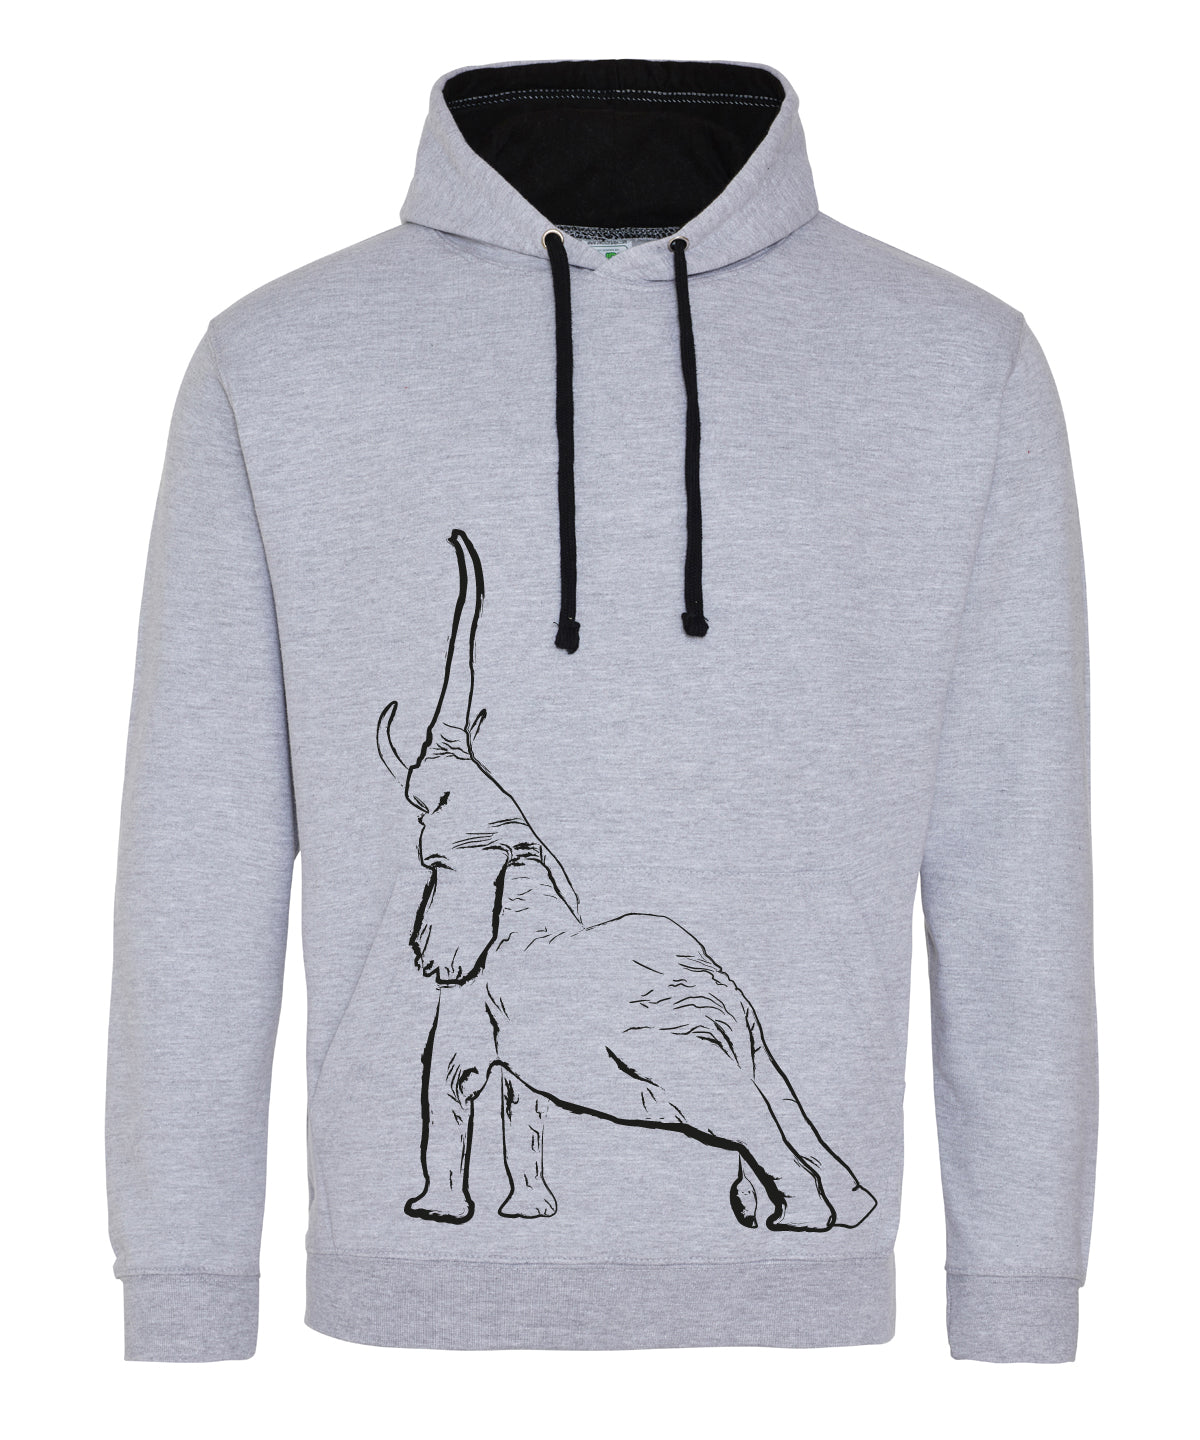 Stretching elephant unisex hoodie